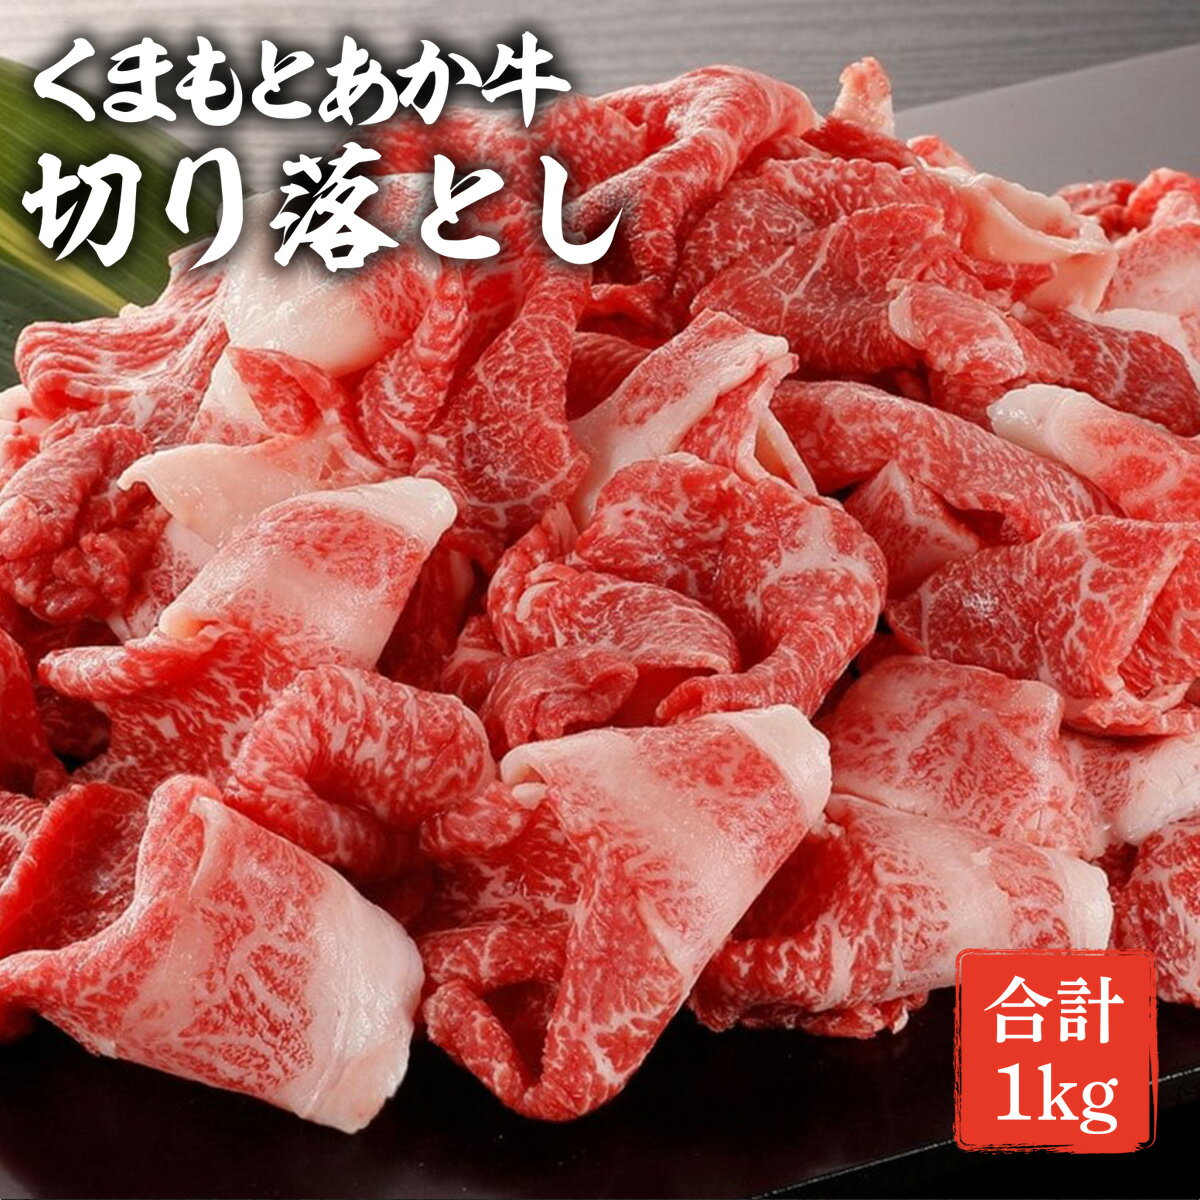 GI認証取得 くまもとあか牛 切り落とし 1kg (500g×2) 熊本県産 牛肉 和牛 国産 切り落とし たっぷり 1キロ 冷凍 和牛 肉 ヘルシー 冷凍 送料無料